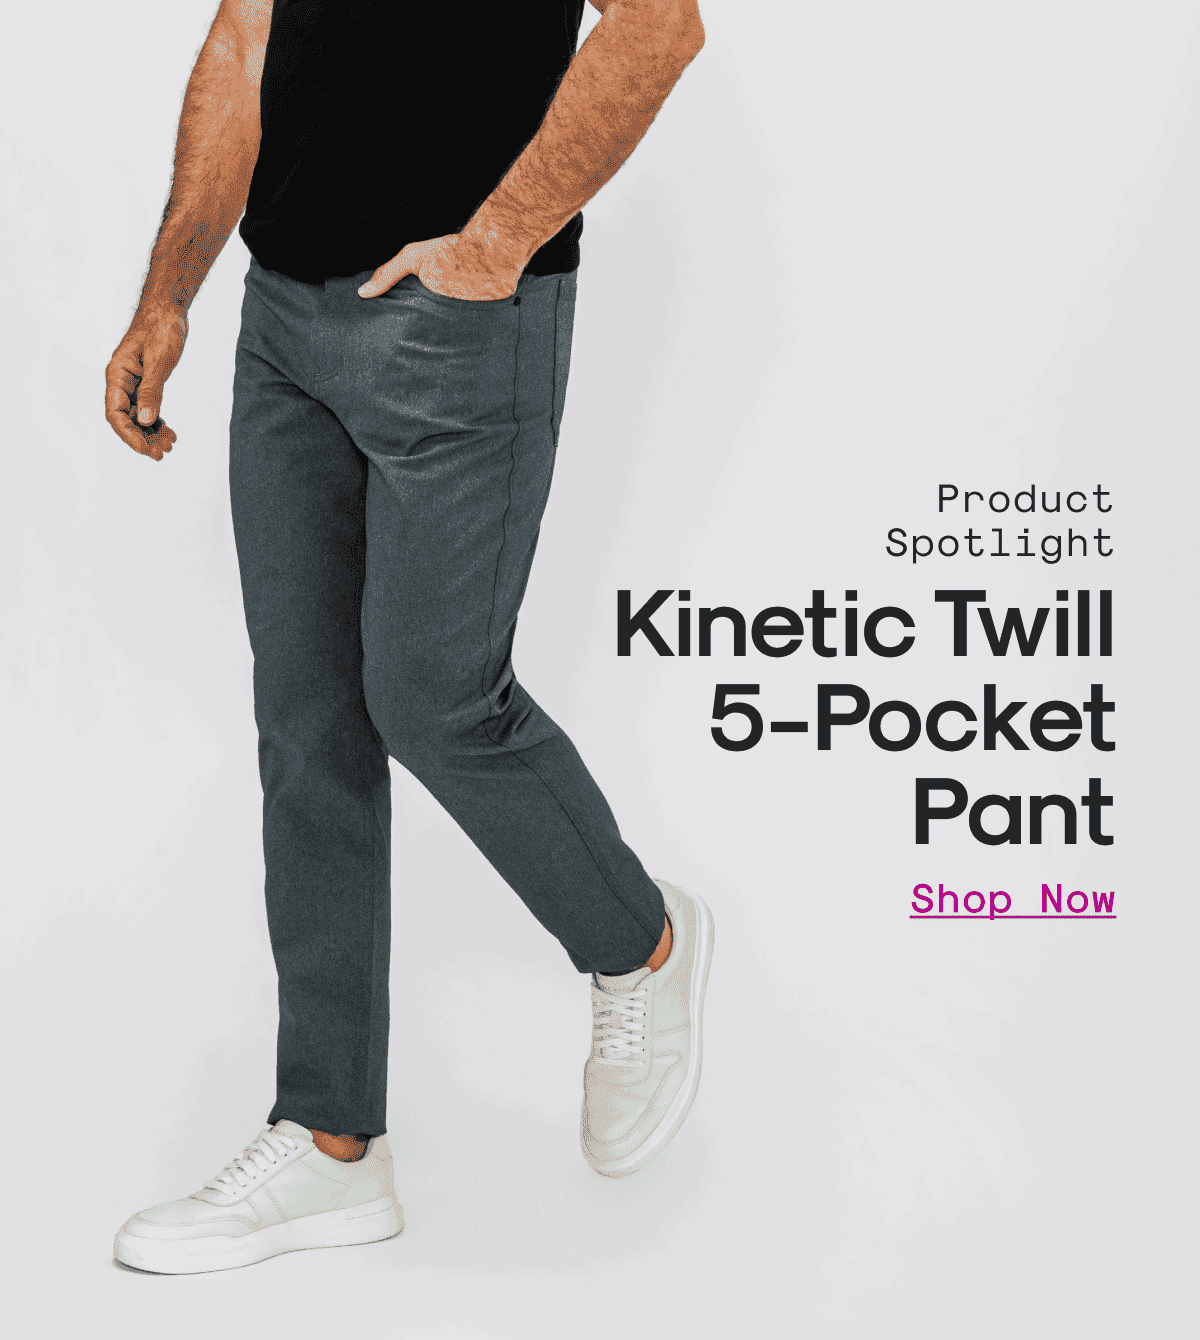 Product Spotlight: Kinetic Twill 5-Pocket Pant